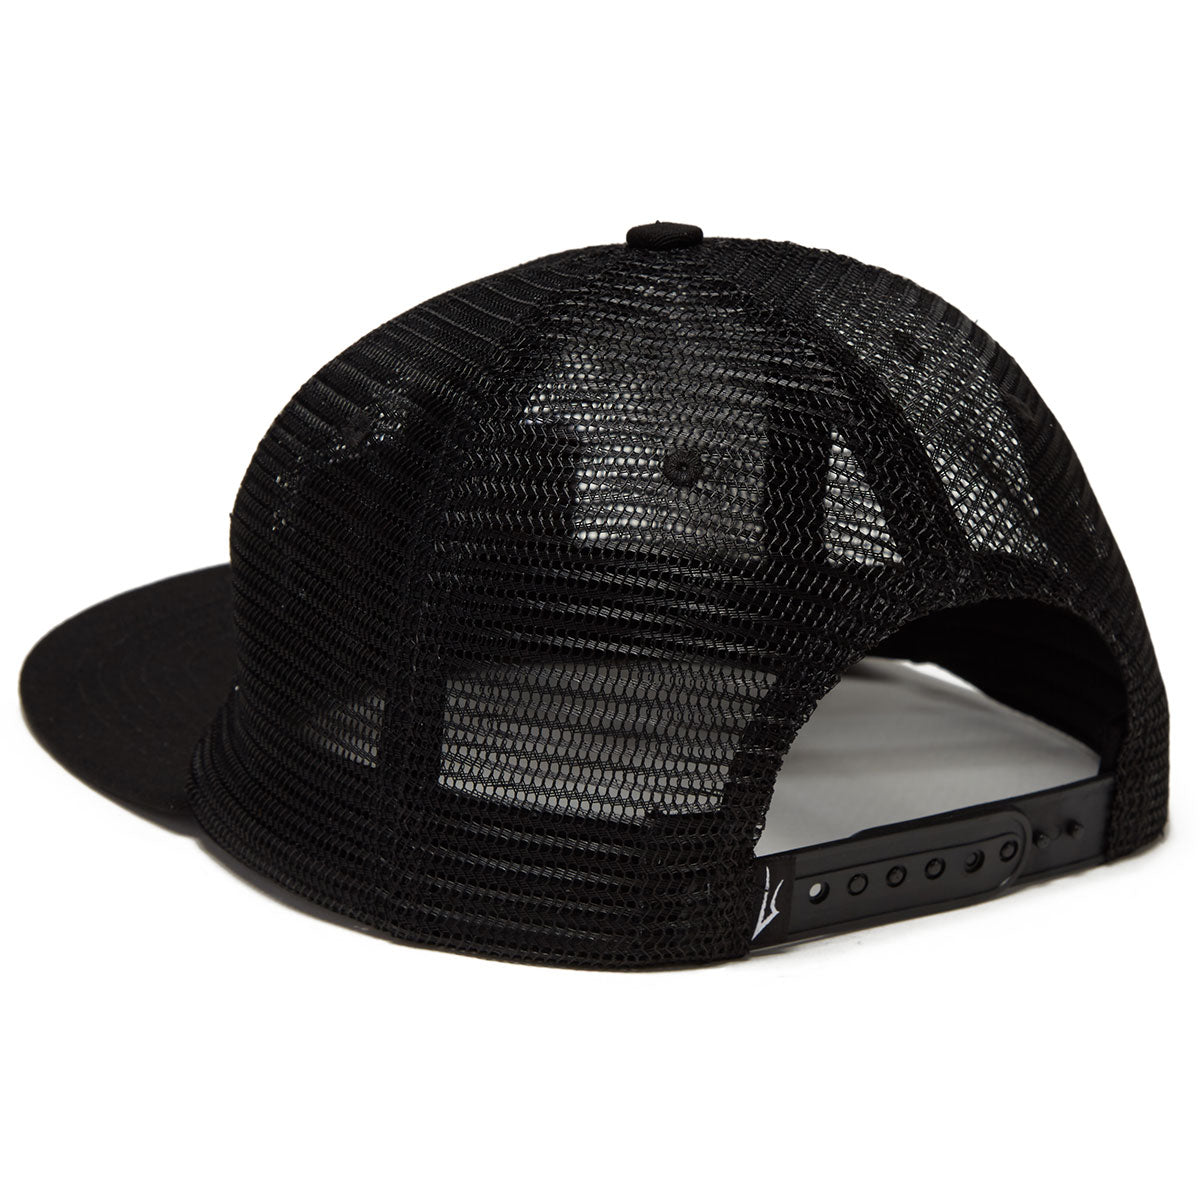 Lakai x Chocolate Petrol Mesh Snapback Hat - Black image 2